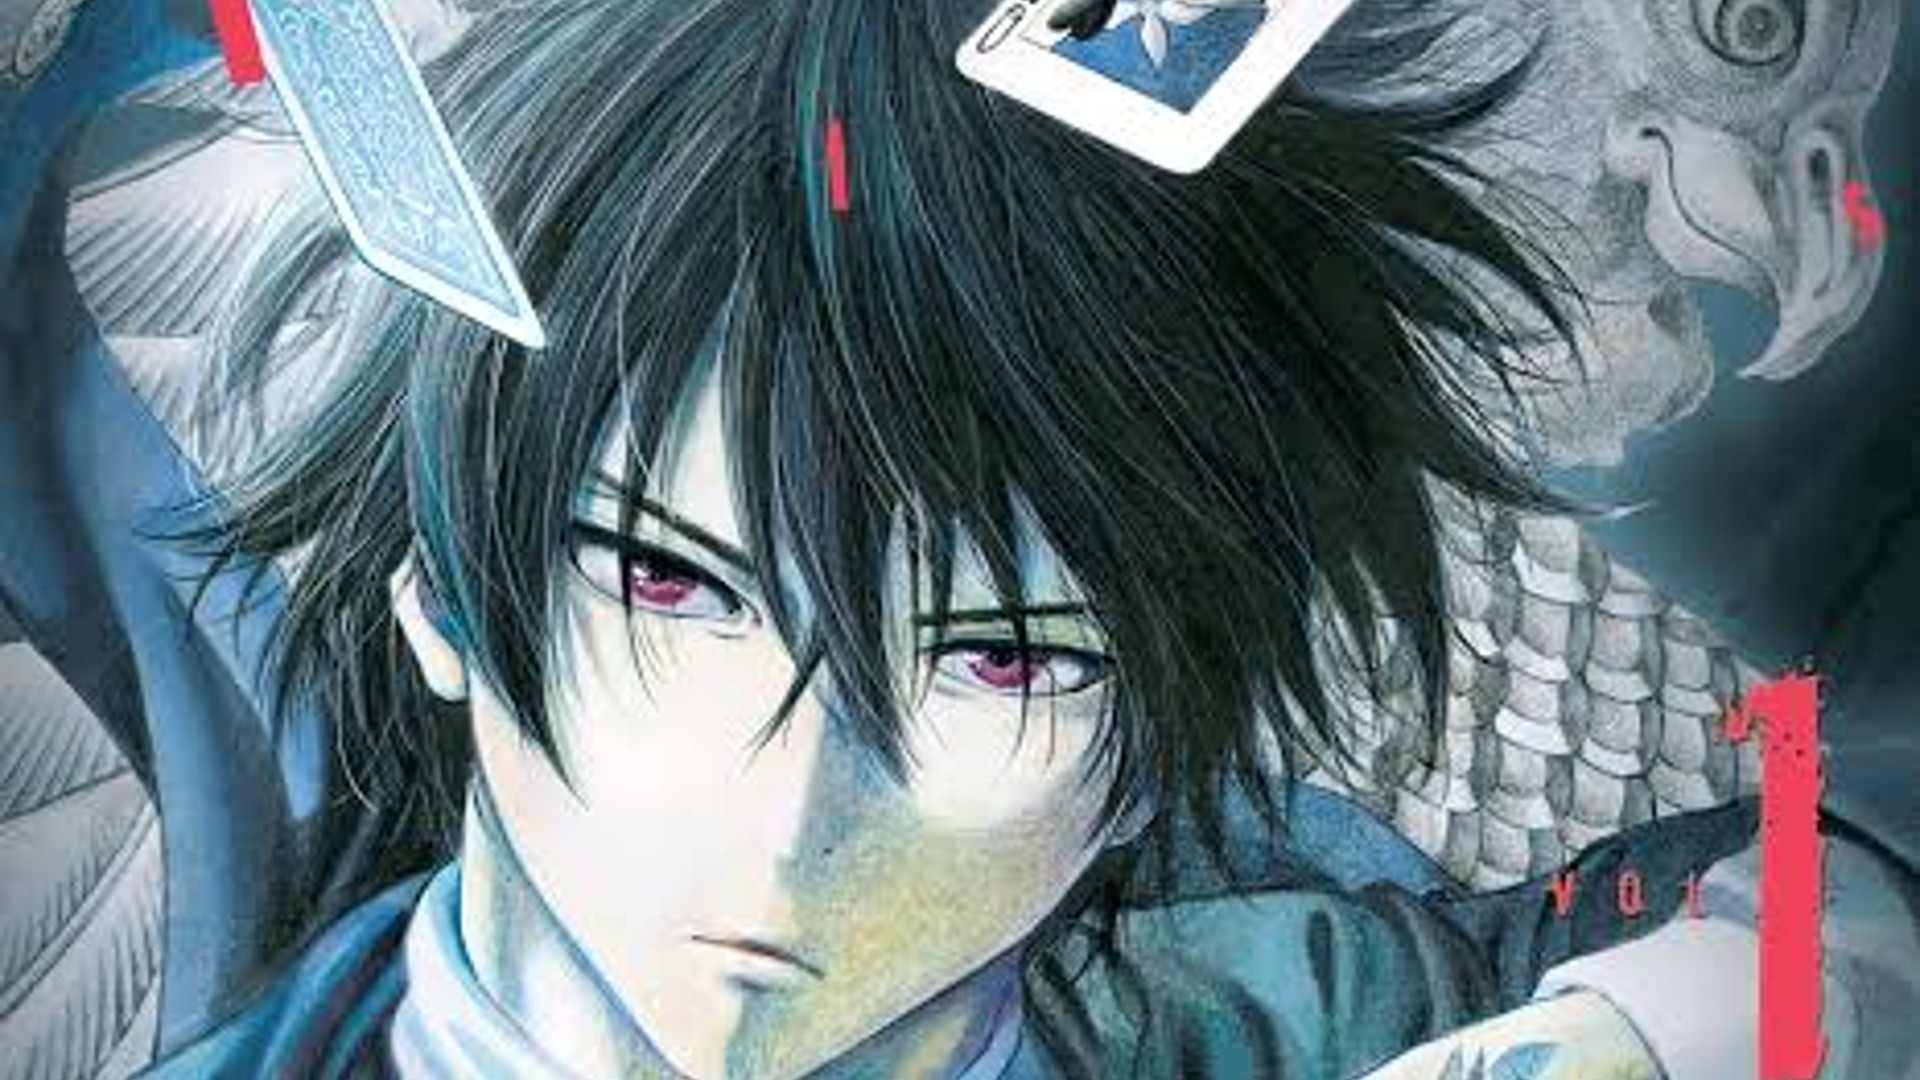 Tomodachi Game Manga Gets Anime Adaptation Release Date